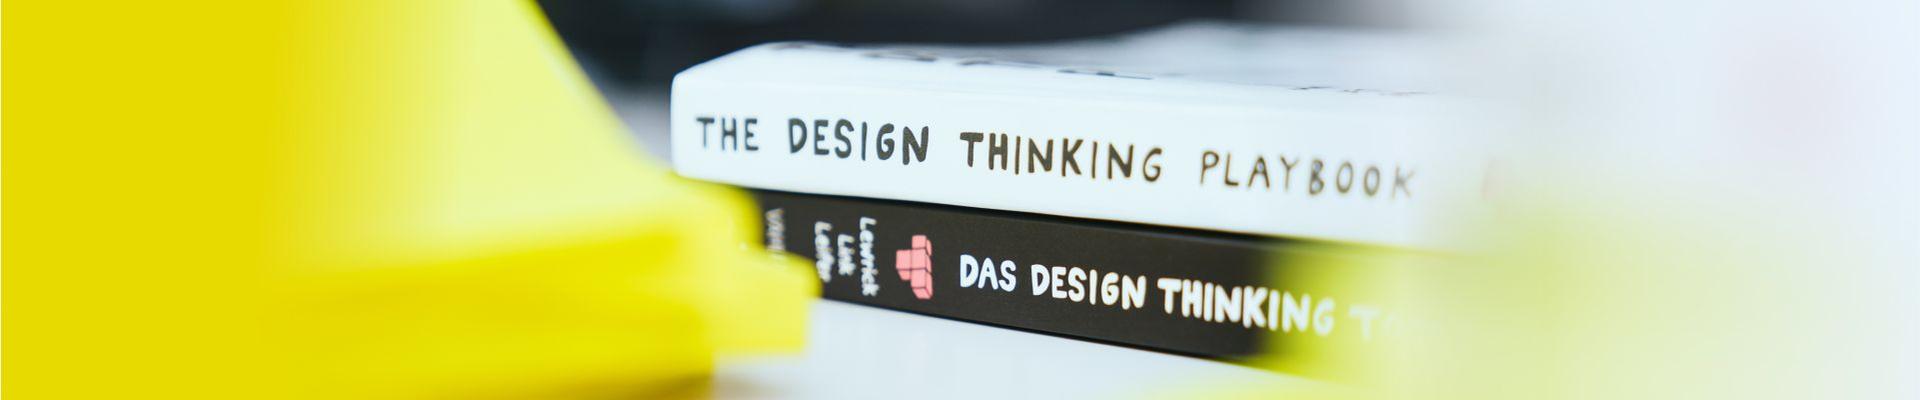 Design thinking masterclass